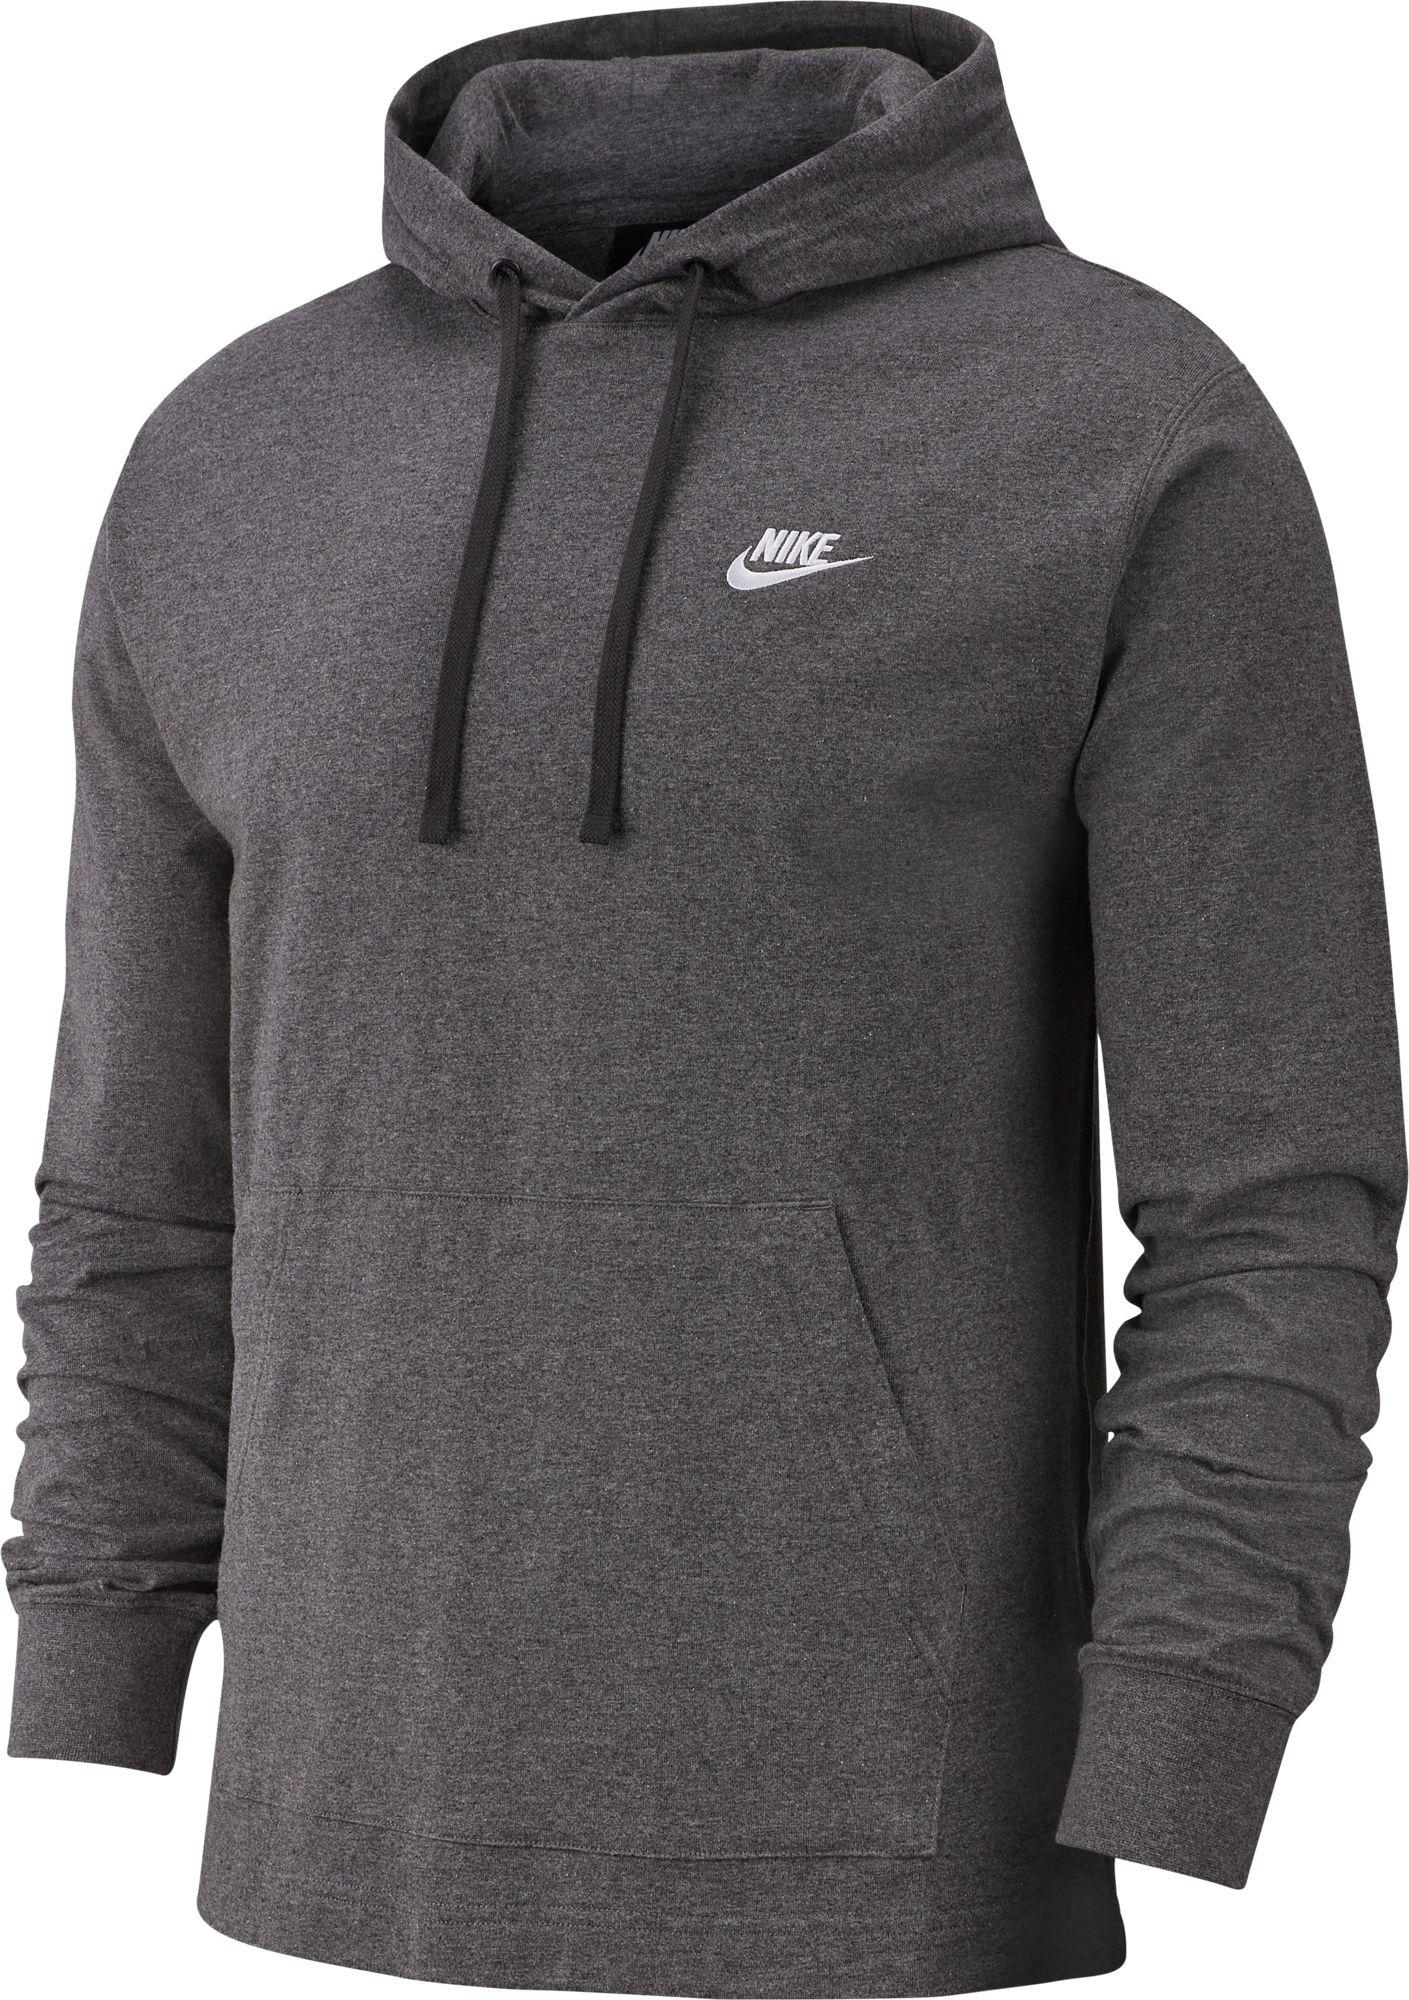 Nike Cotton Sportswear Club Jersey Pullover Hoodie in Gray for Men - Lyst